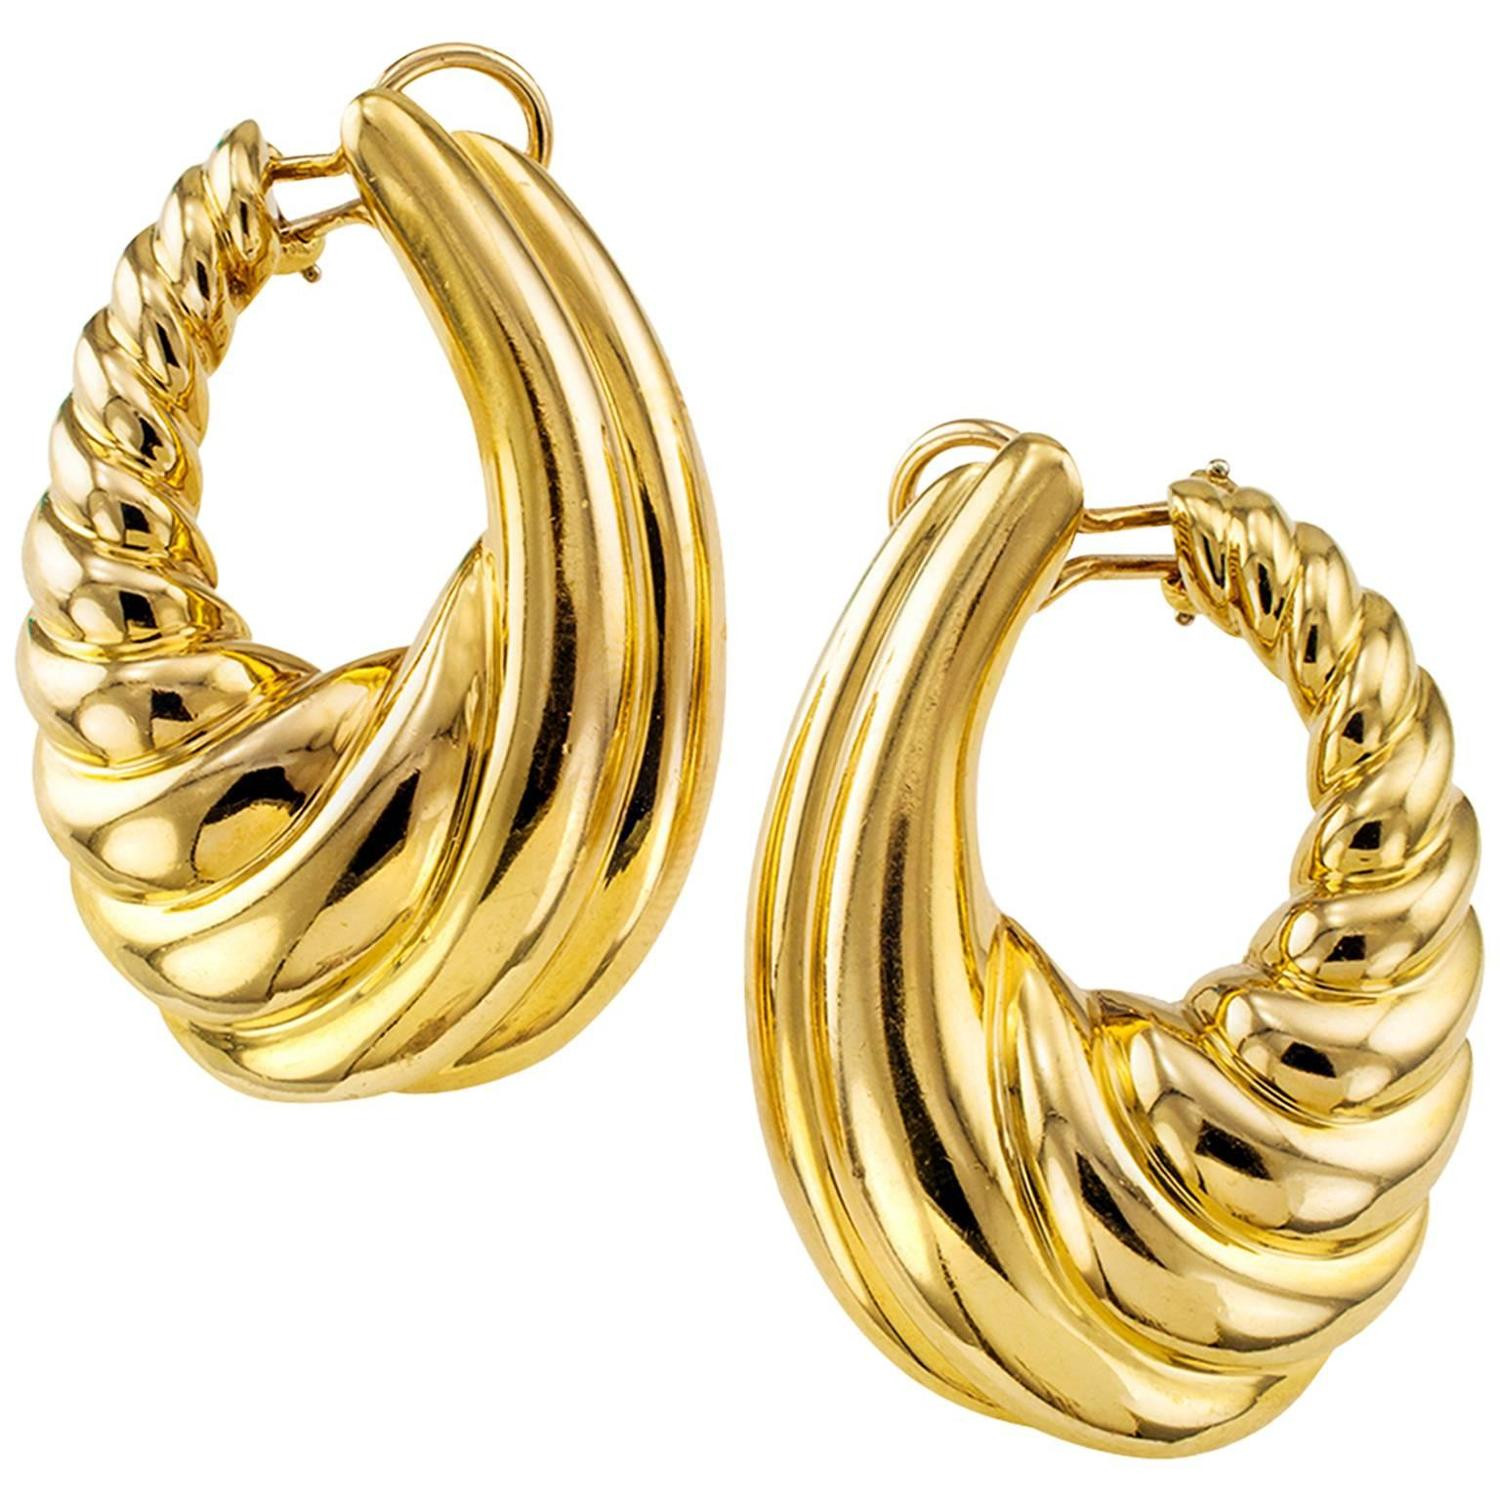 Big Gold Earrings
 Clip on Gold Hoop Earrings For Sale at 1stdibs